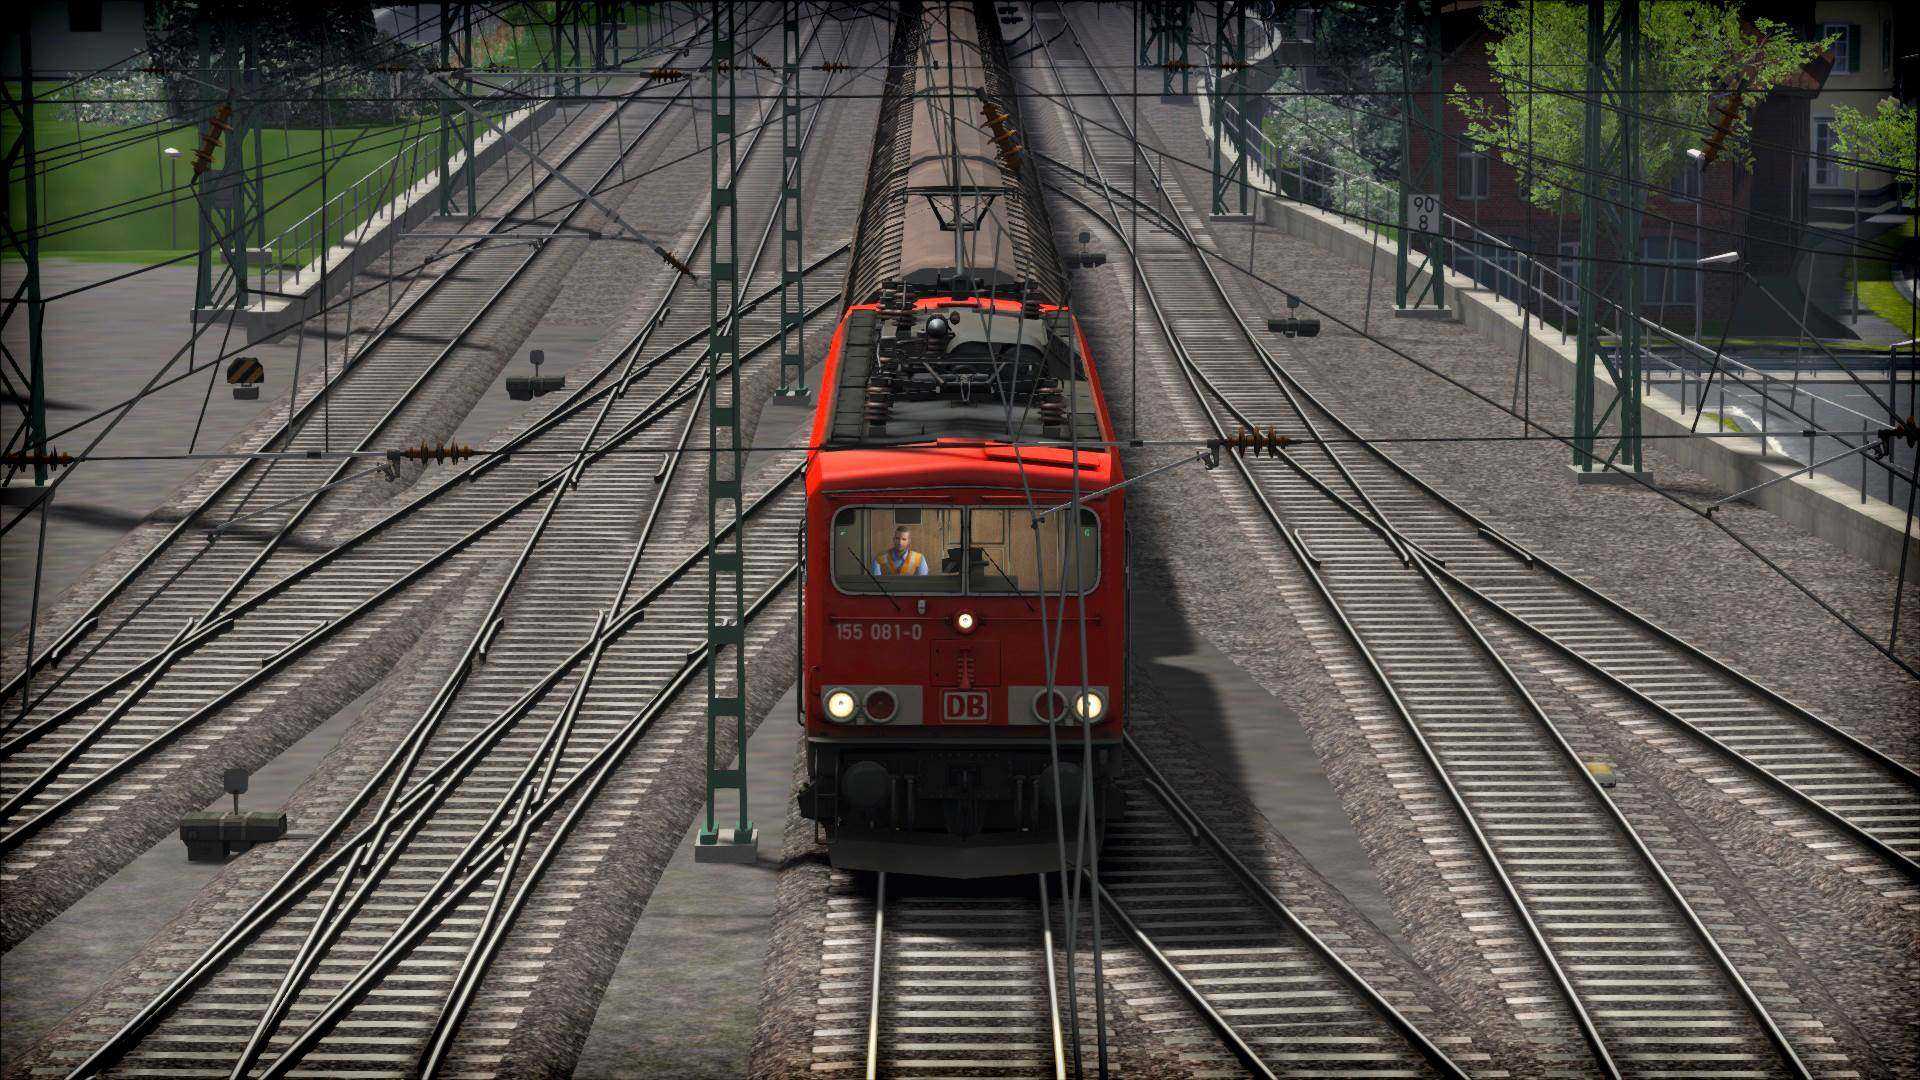 train simulator 2016 steam edition account